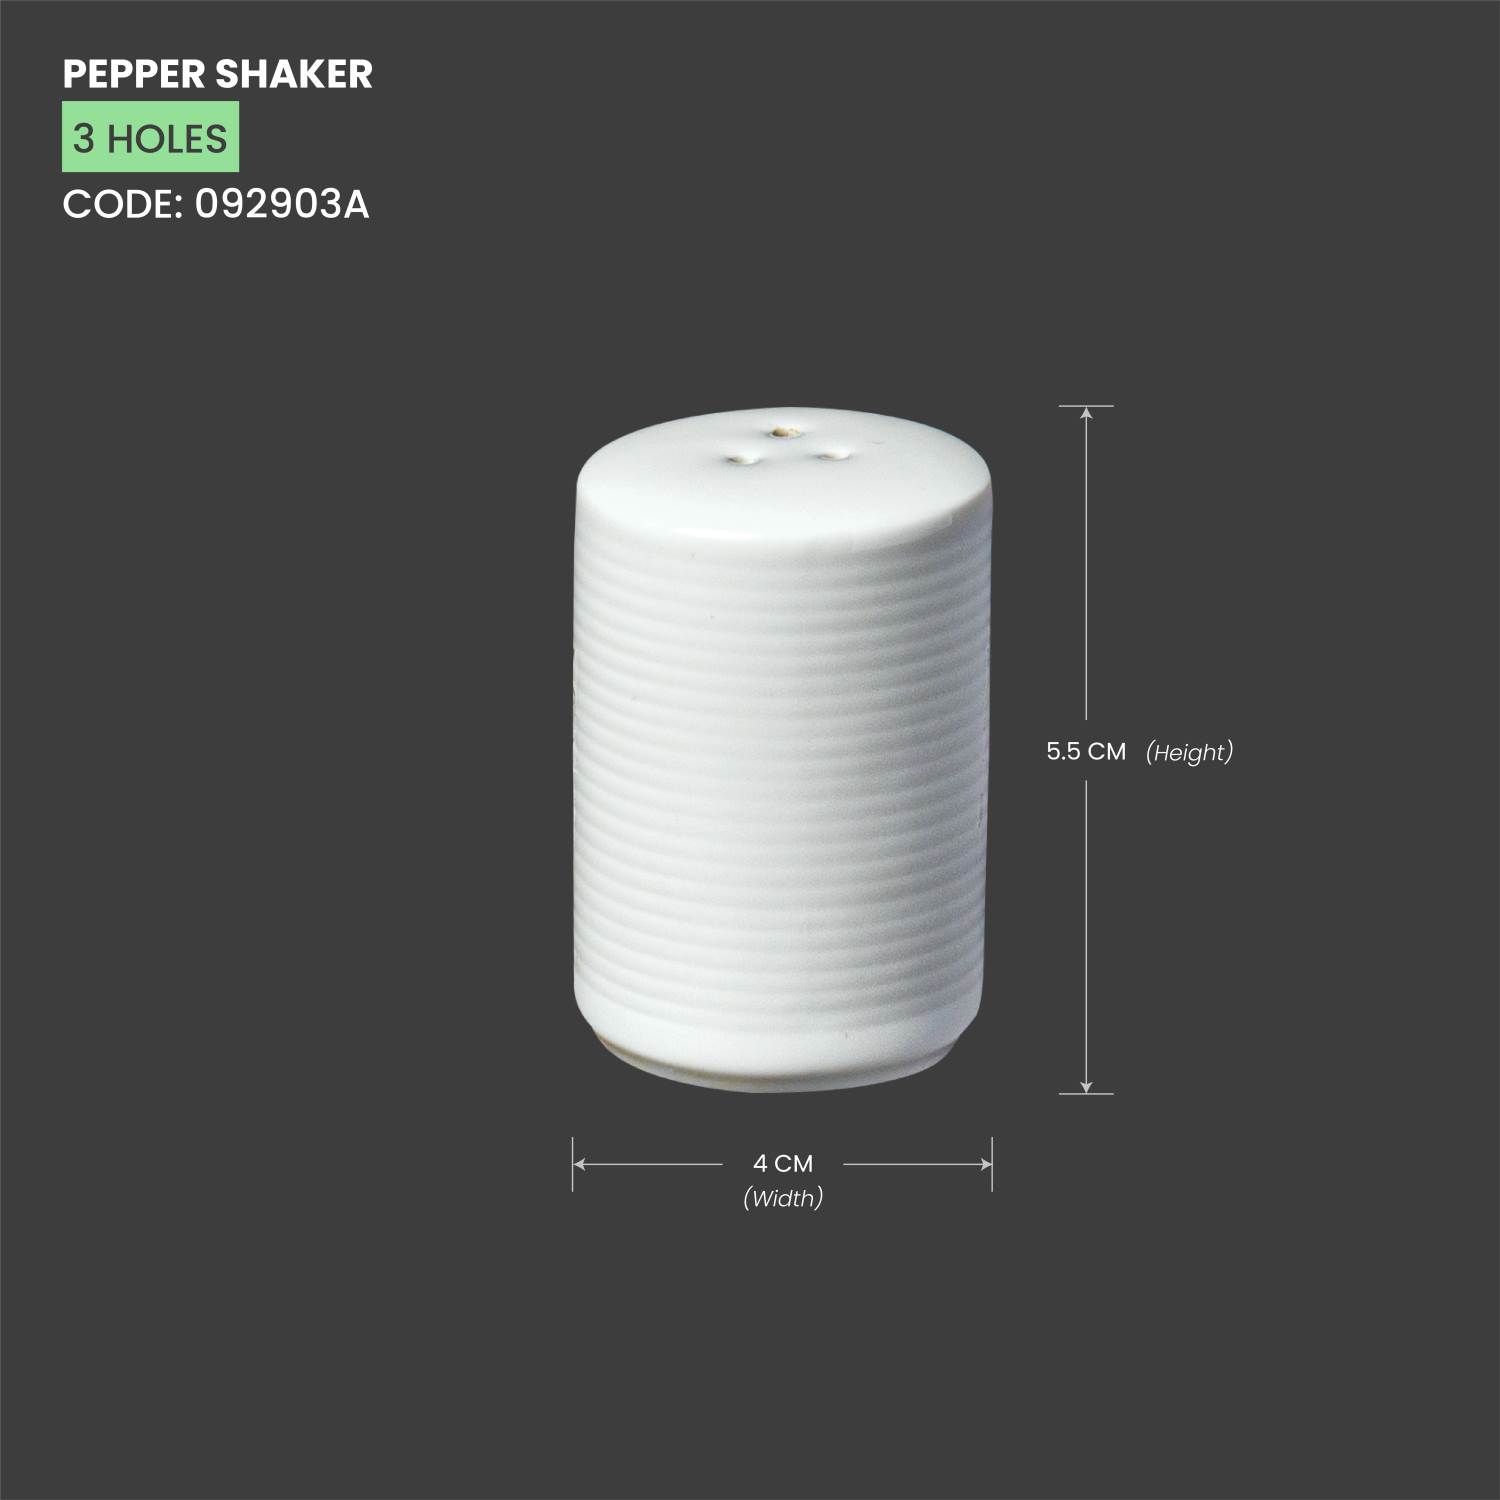 Baralee Wish Pepper Shaker (3 Holes)